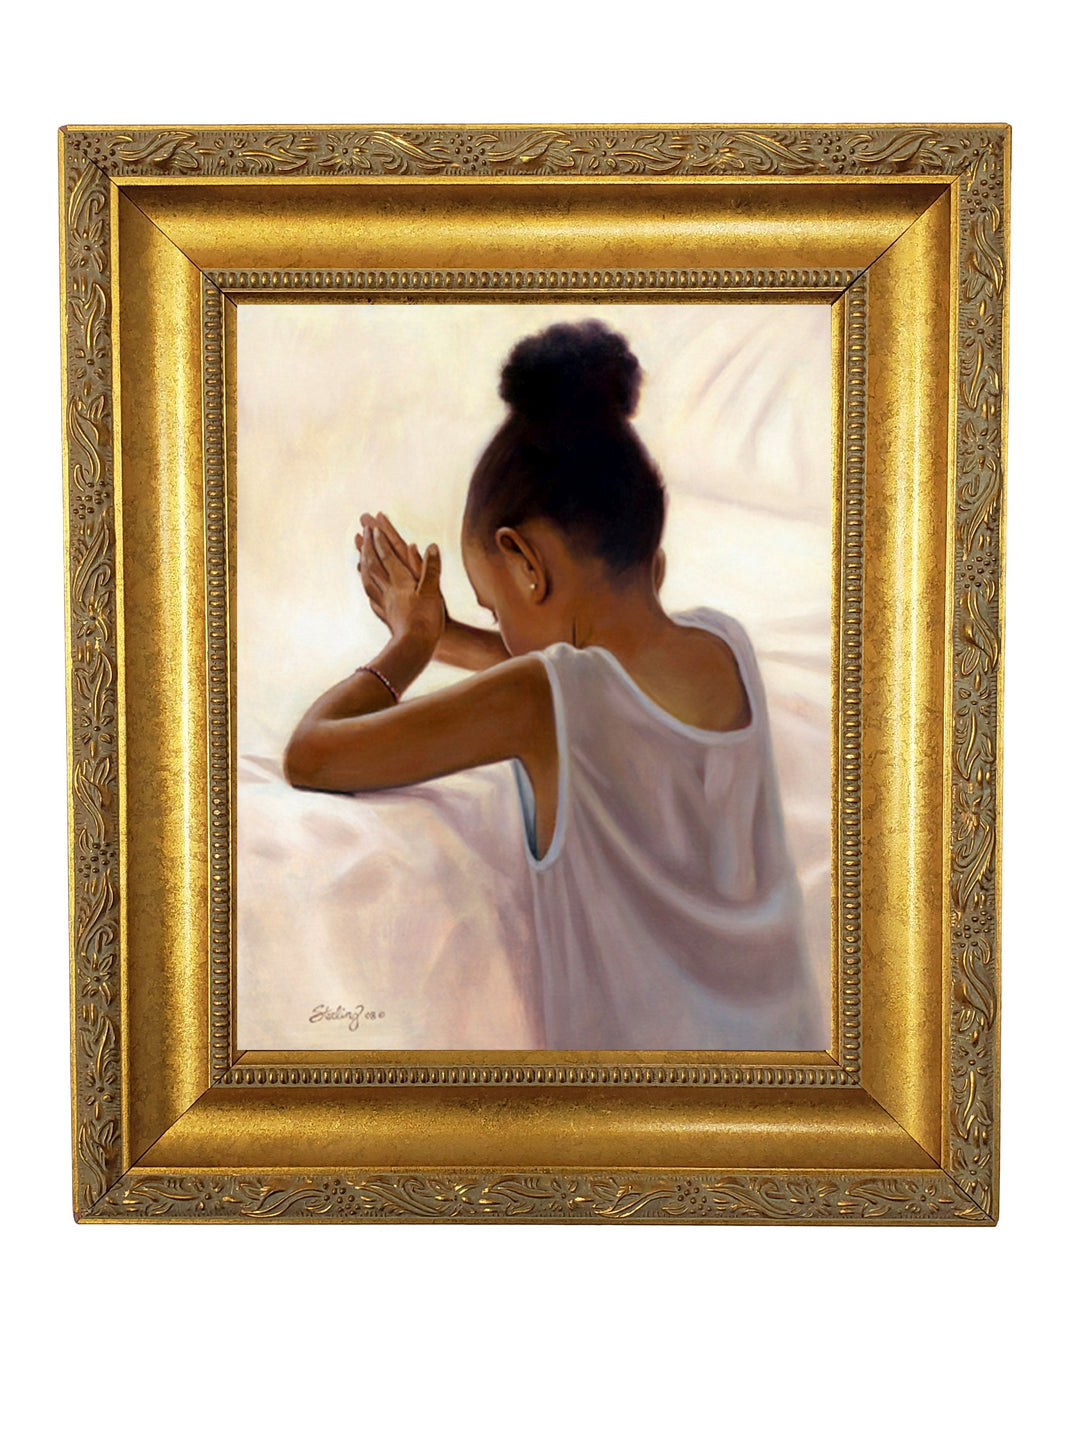 Bedtime Prayer by Sterling Brown (Gold Frame)